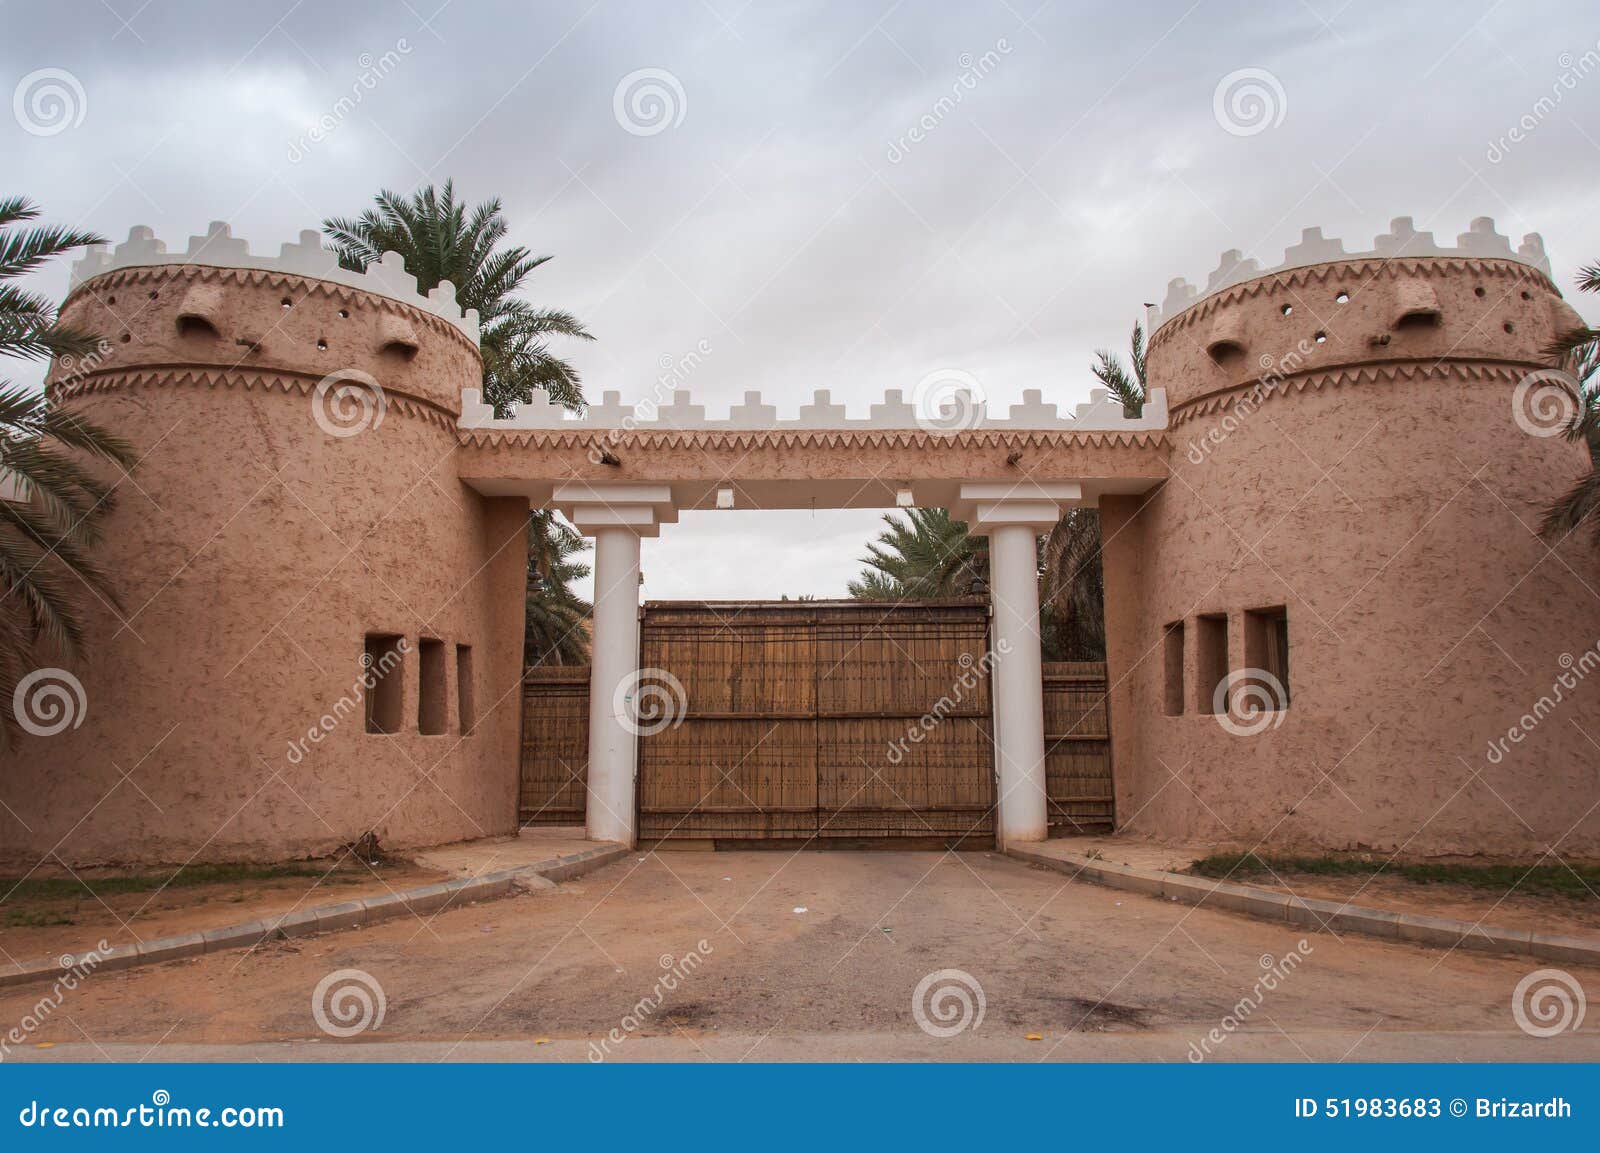 riyadh extravagant and huge houses, saudi arabia